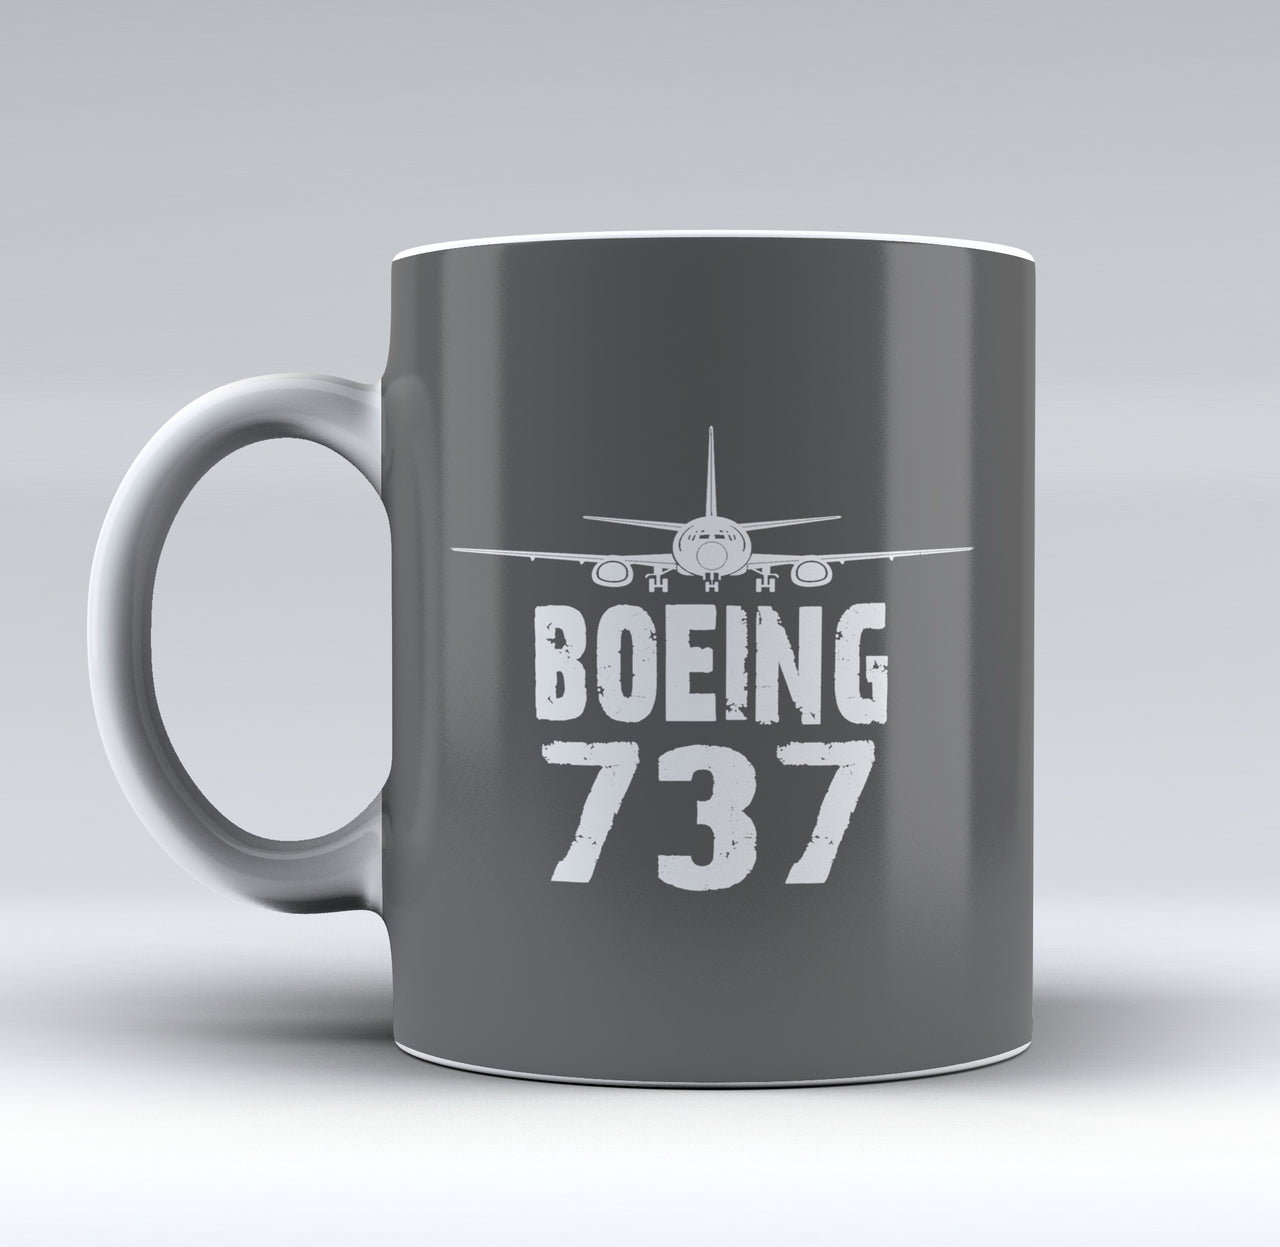 Boeing 737 & Plane Designed Mugs